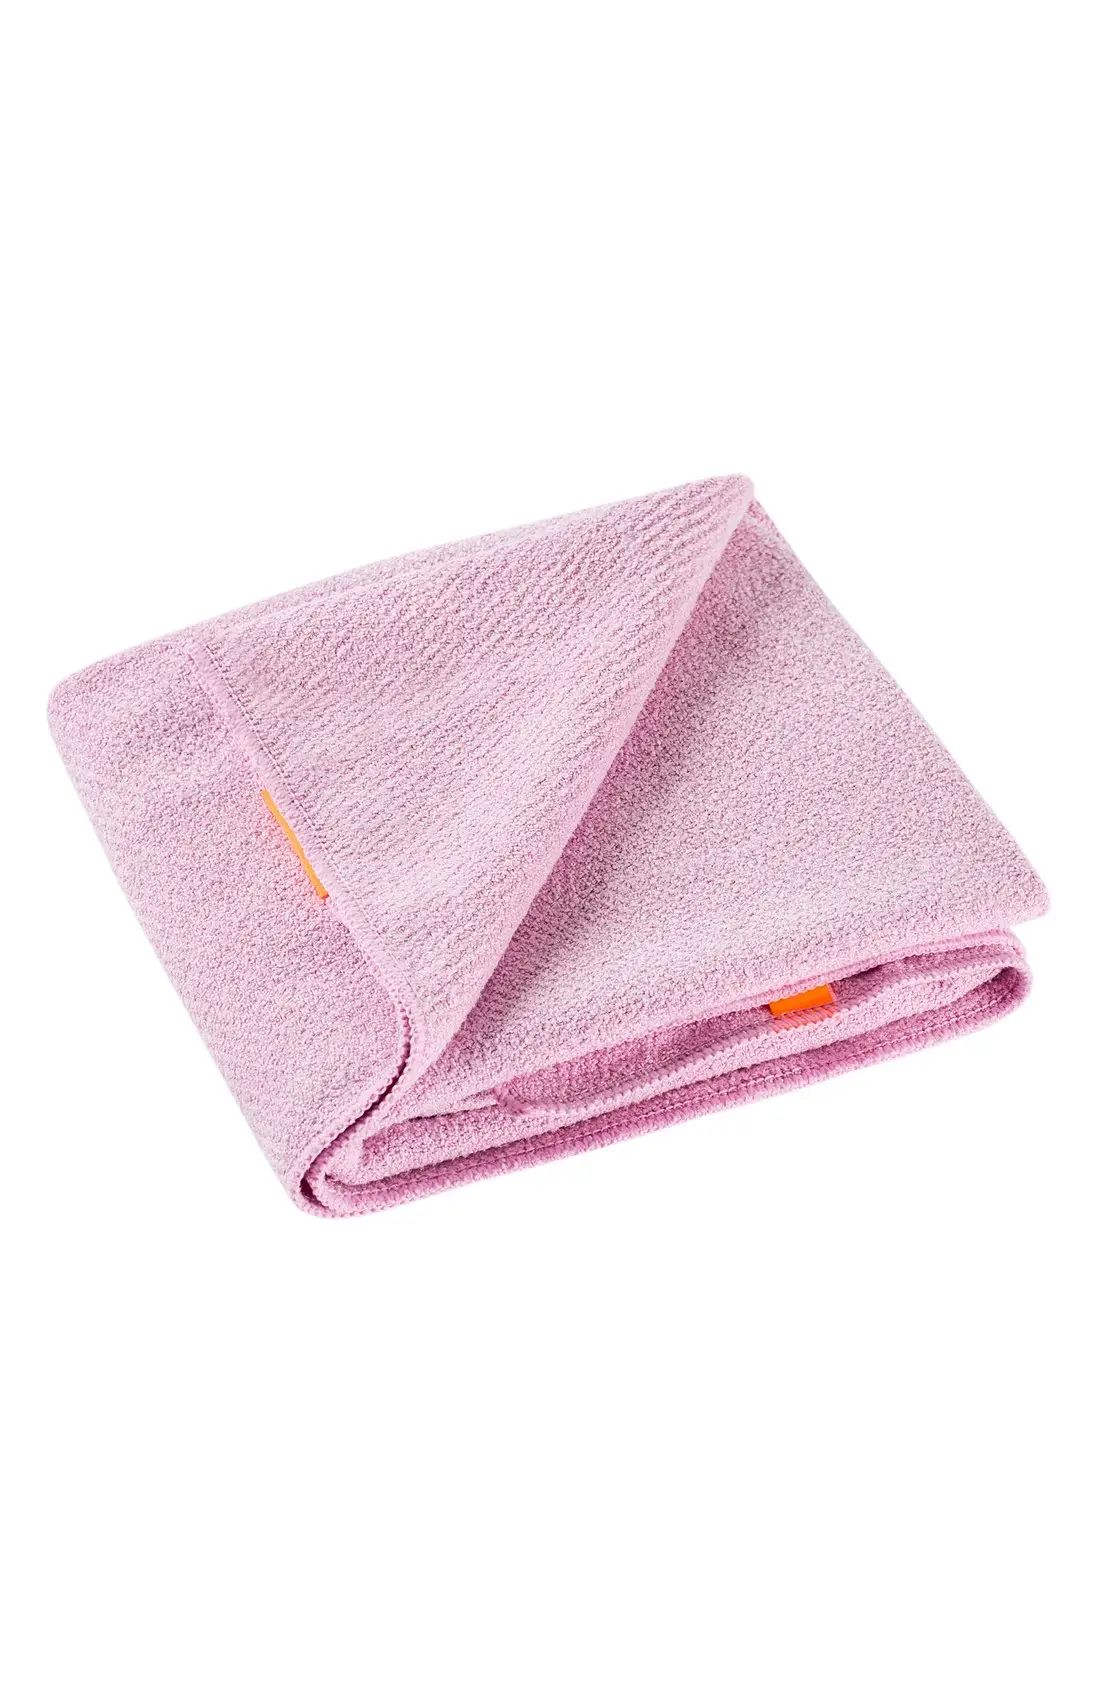 AQUIS Rapid Dry Lisse Hair Towel in Desert Rose at Nordstrom | Nordstrom